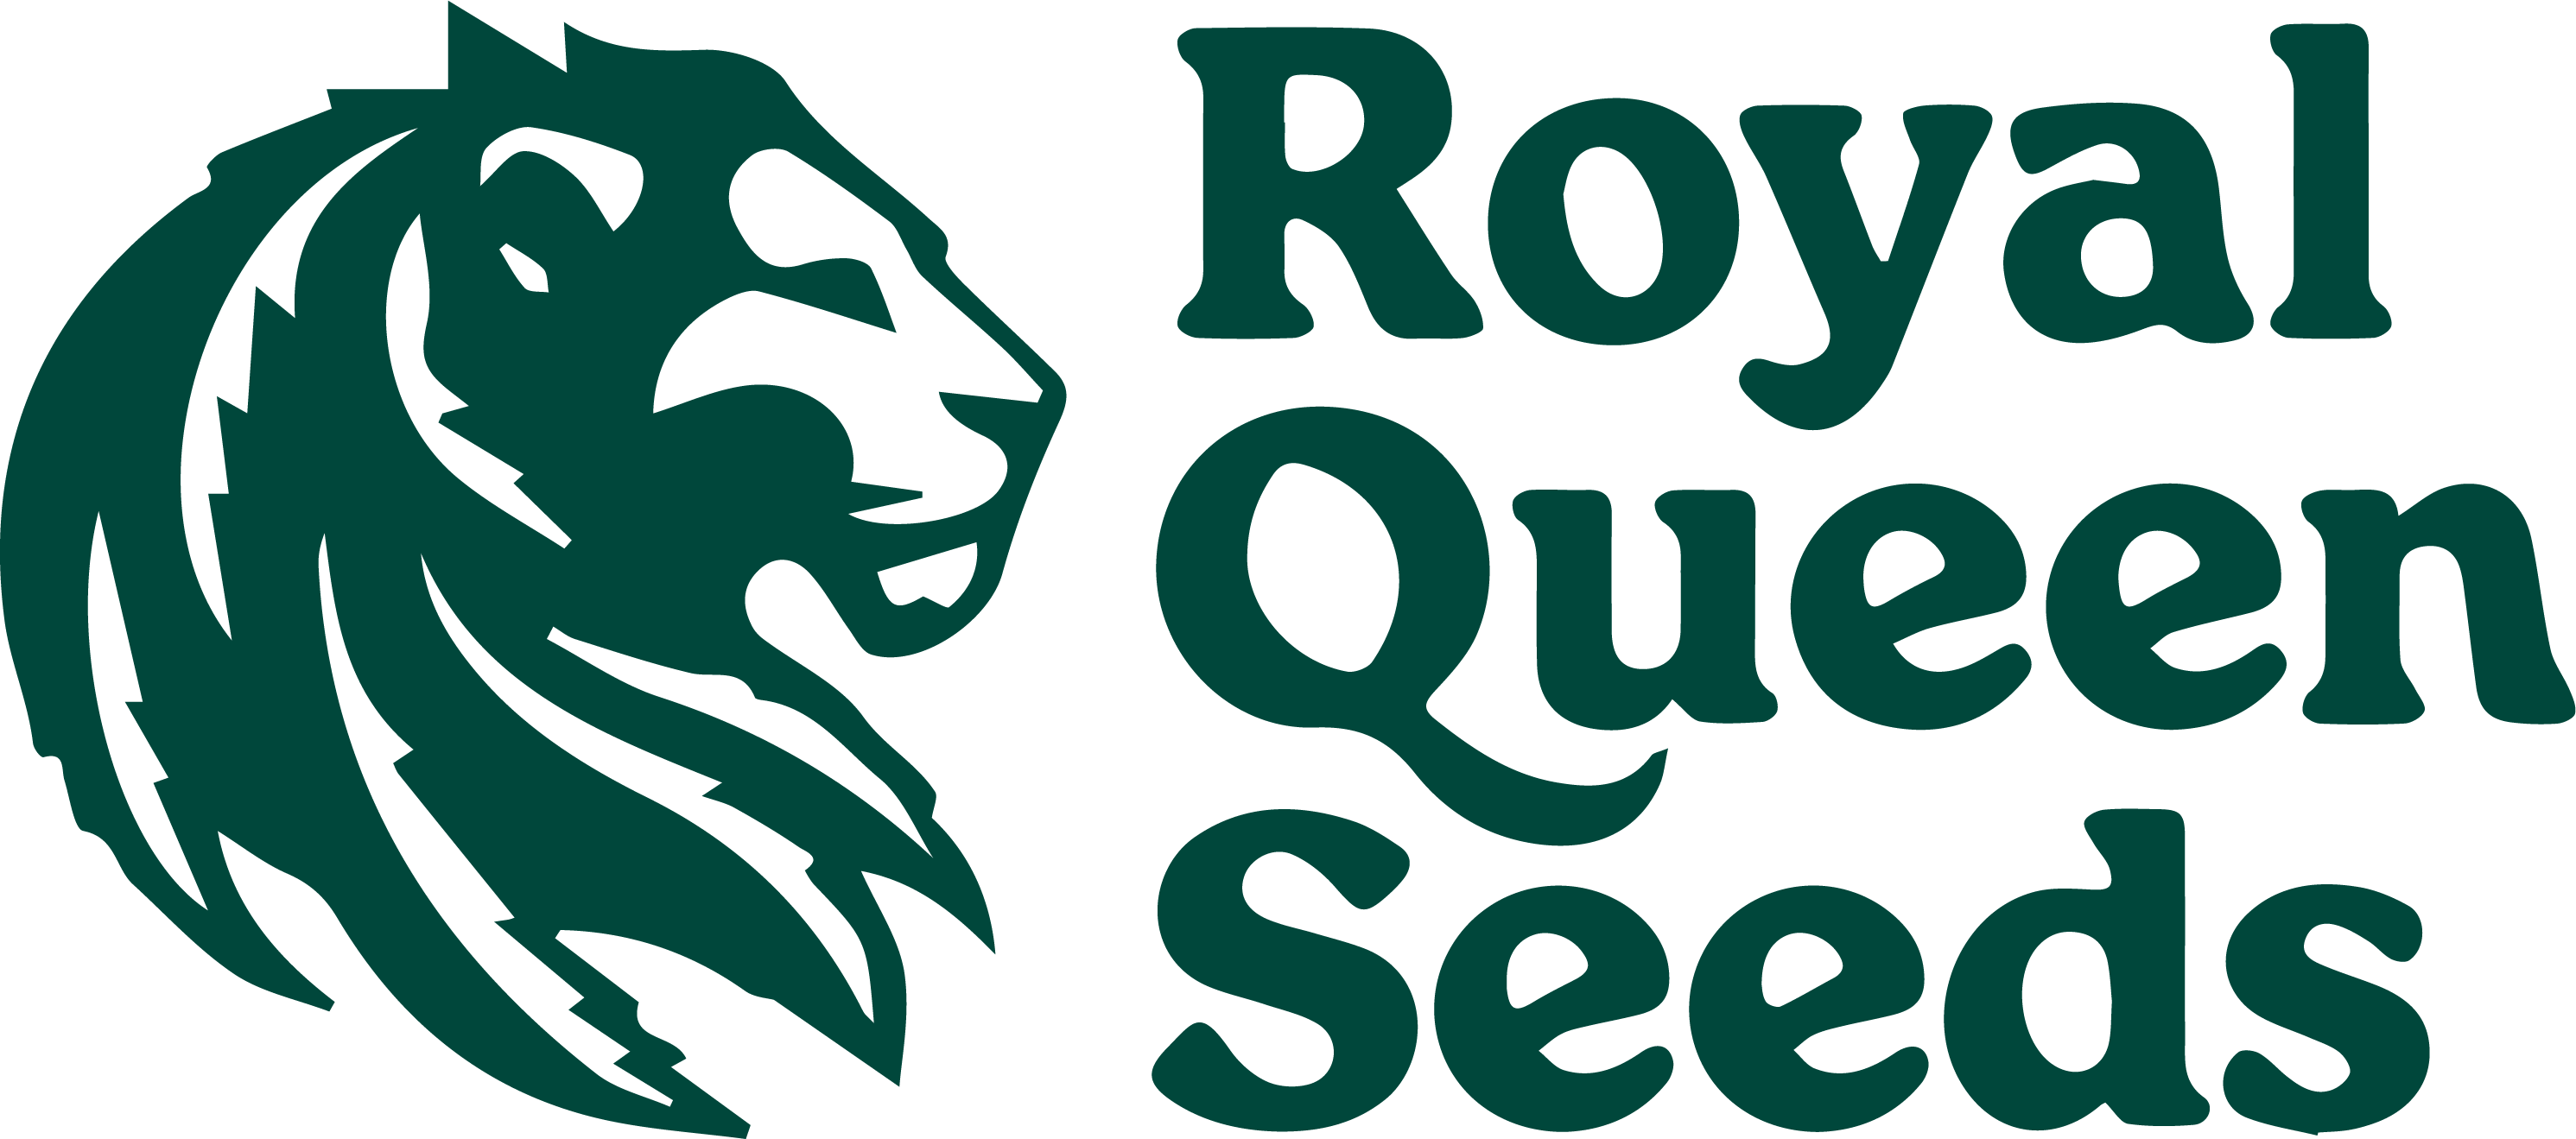 Royal Queen Seeds - Feminized Cannabis Seeds